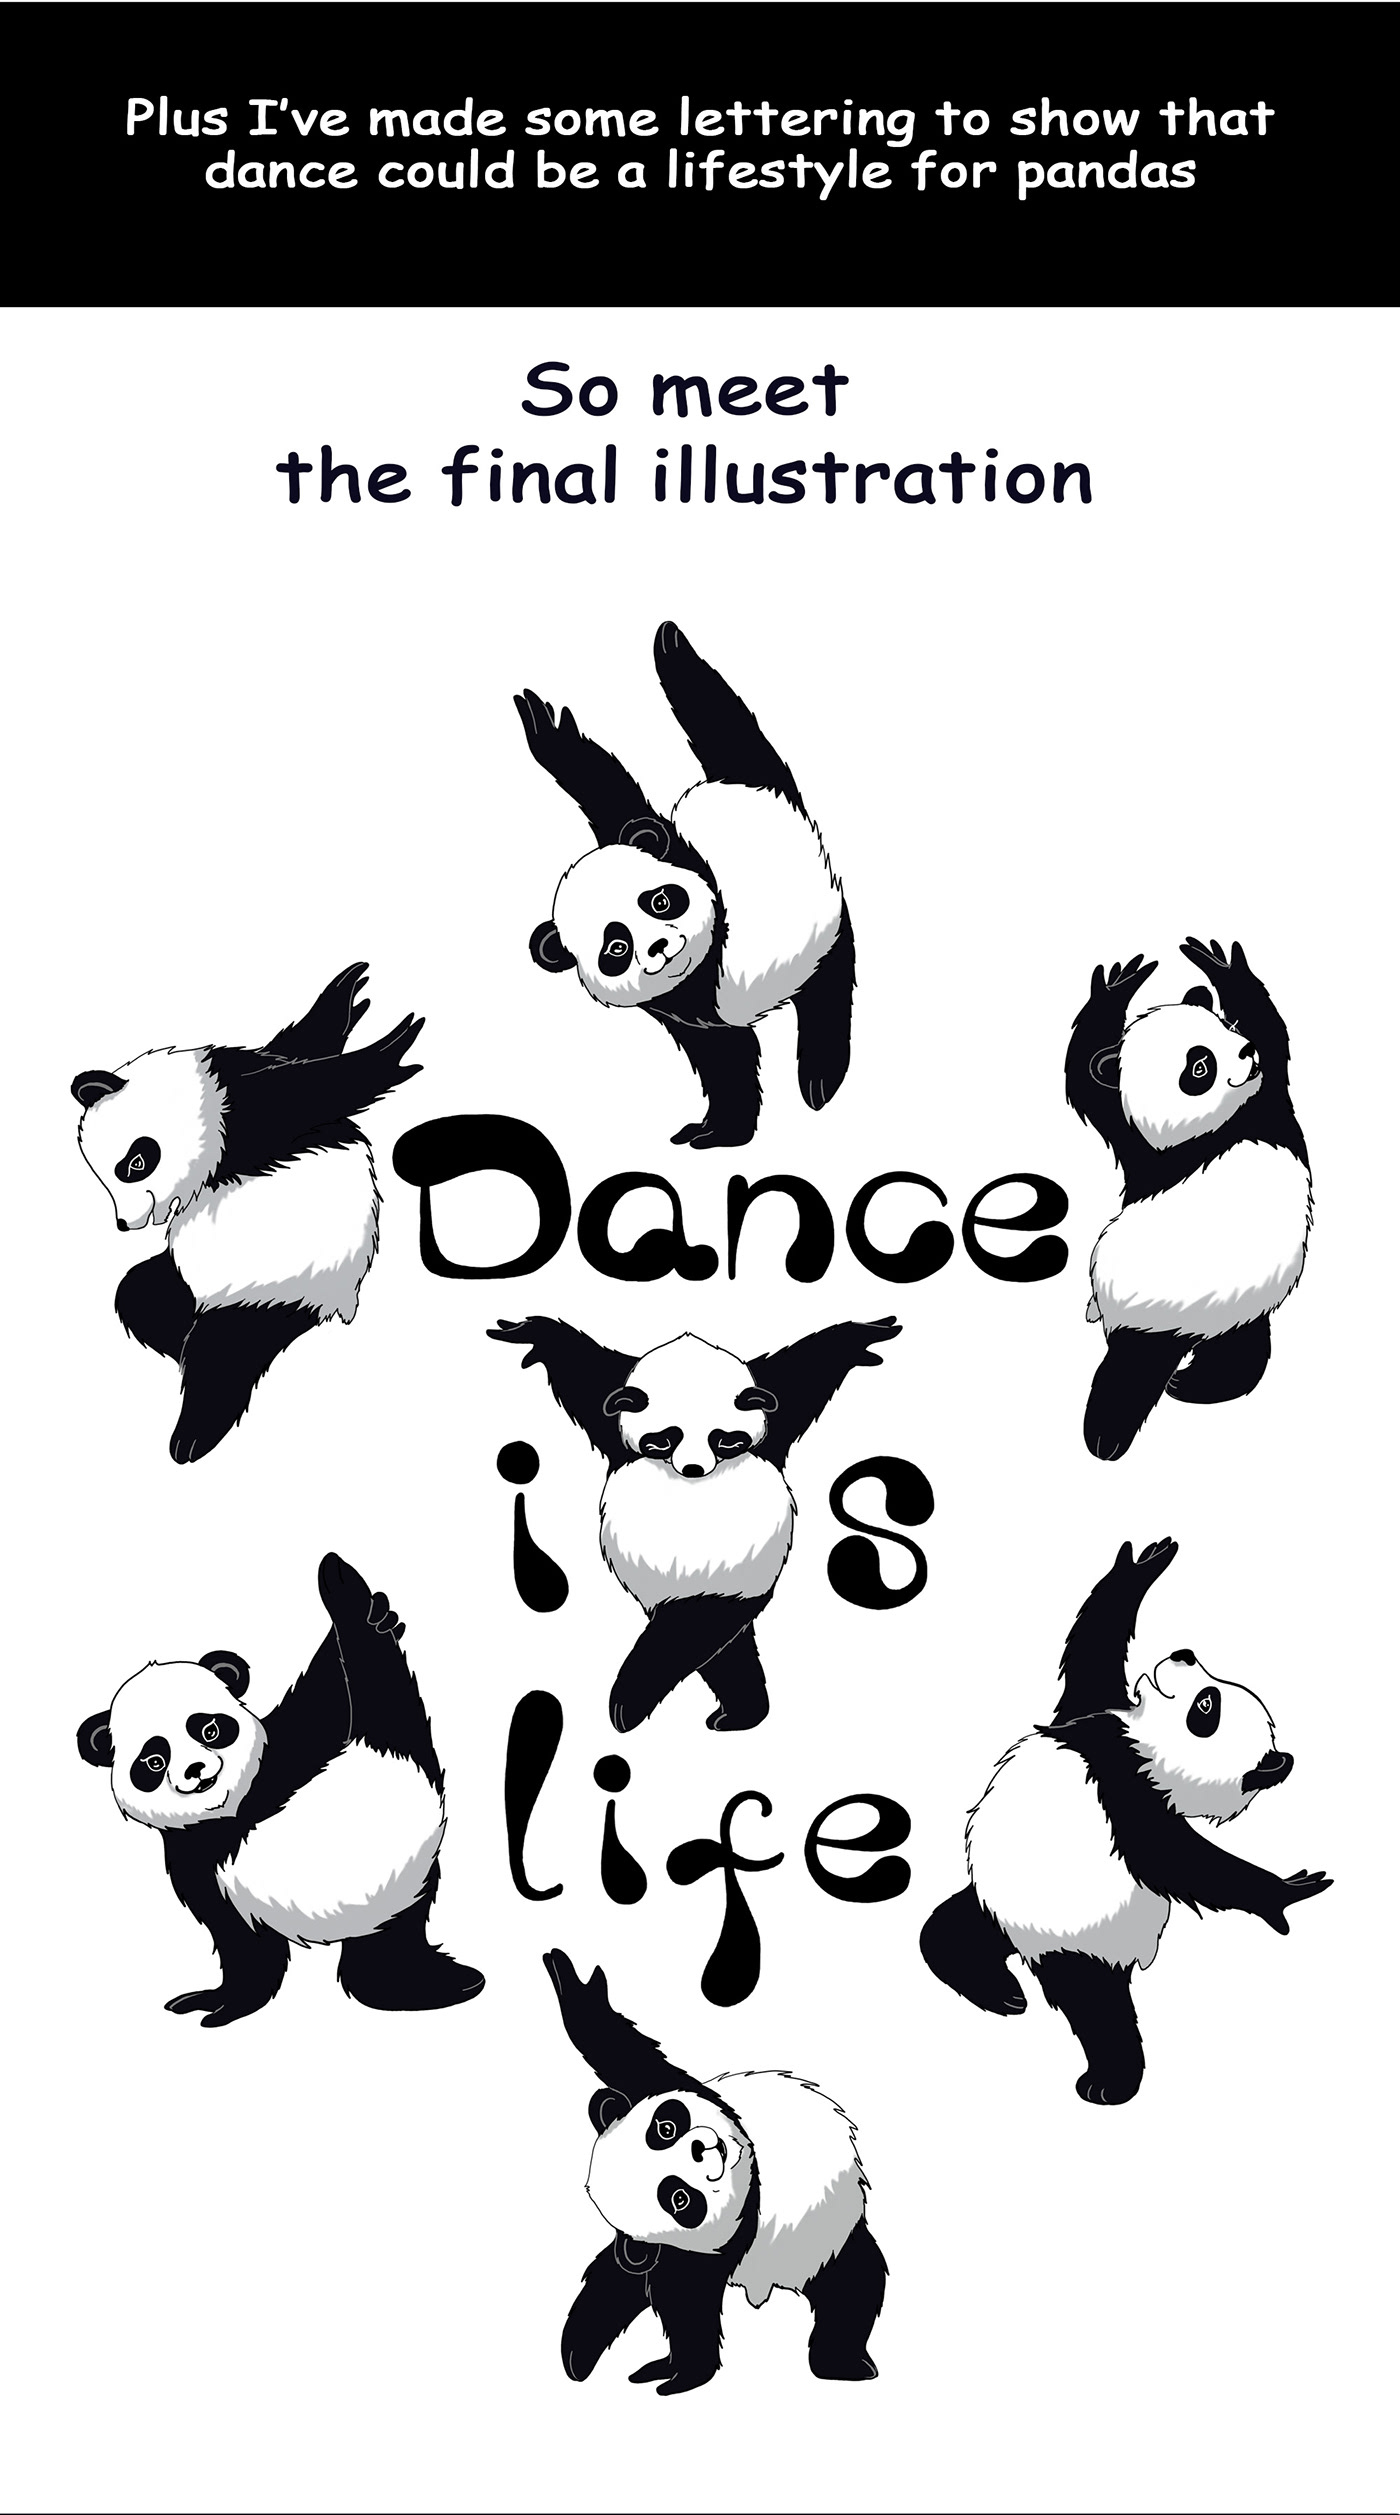 Final poster with dancing pandas